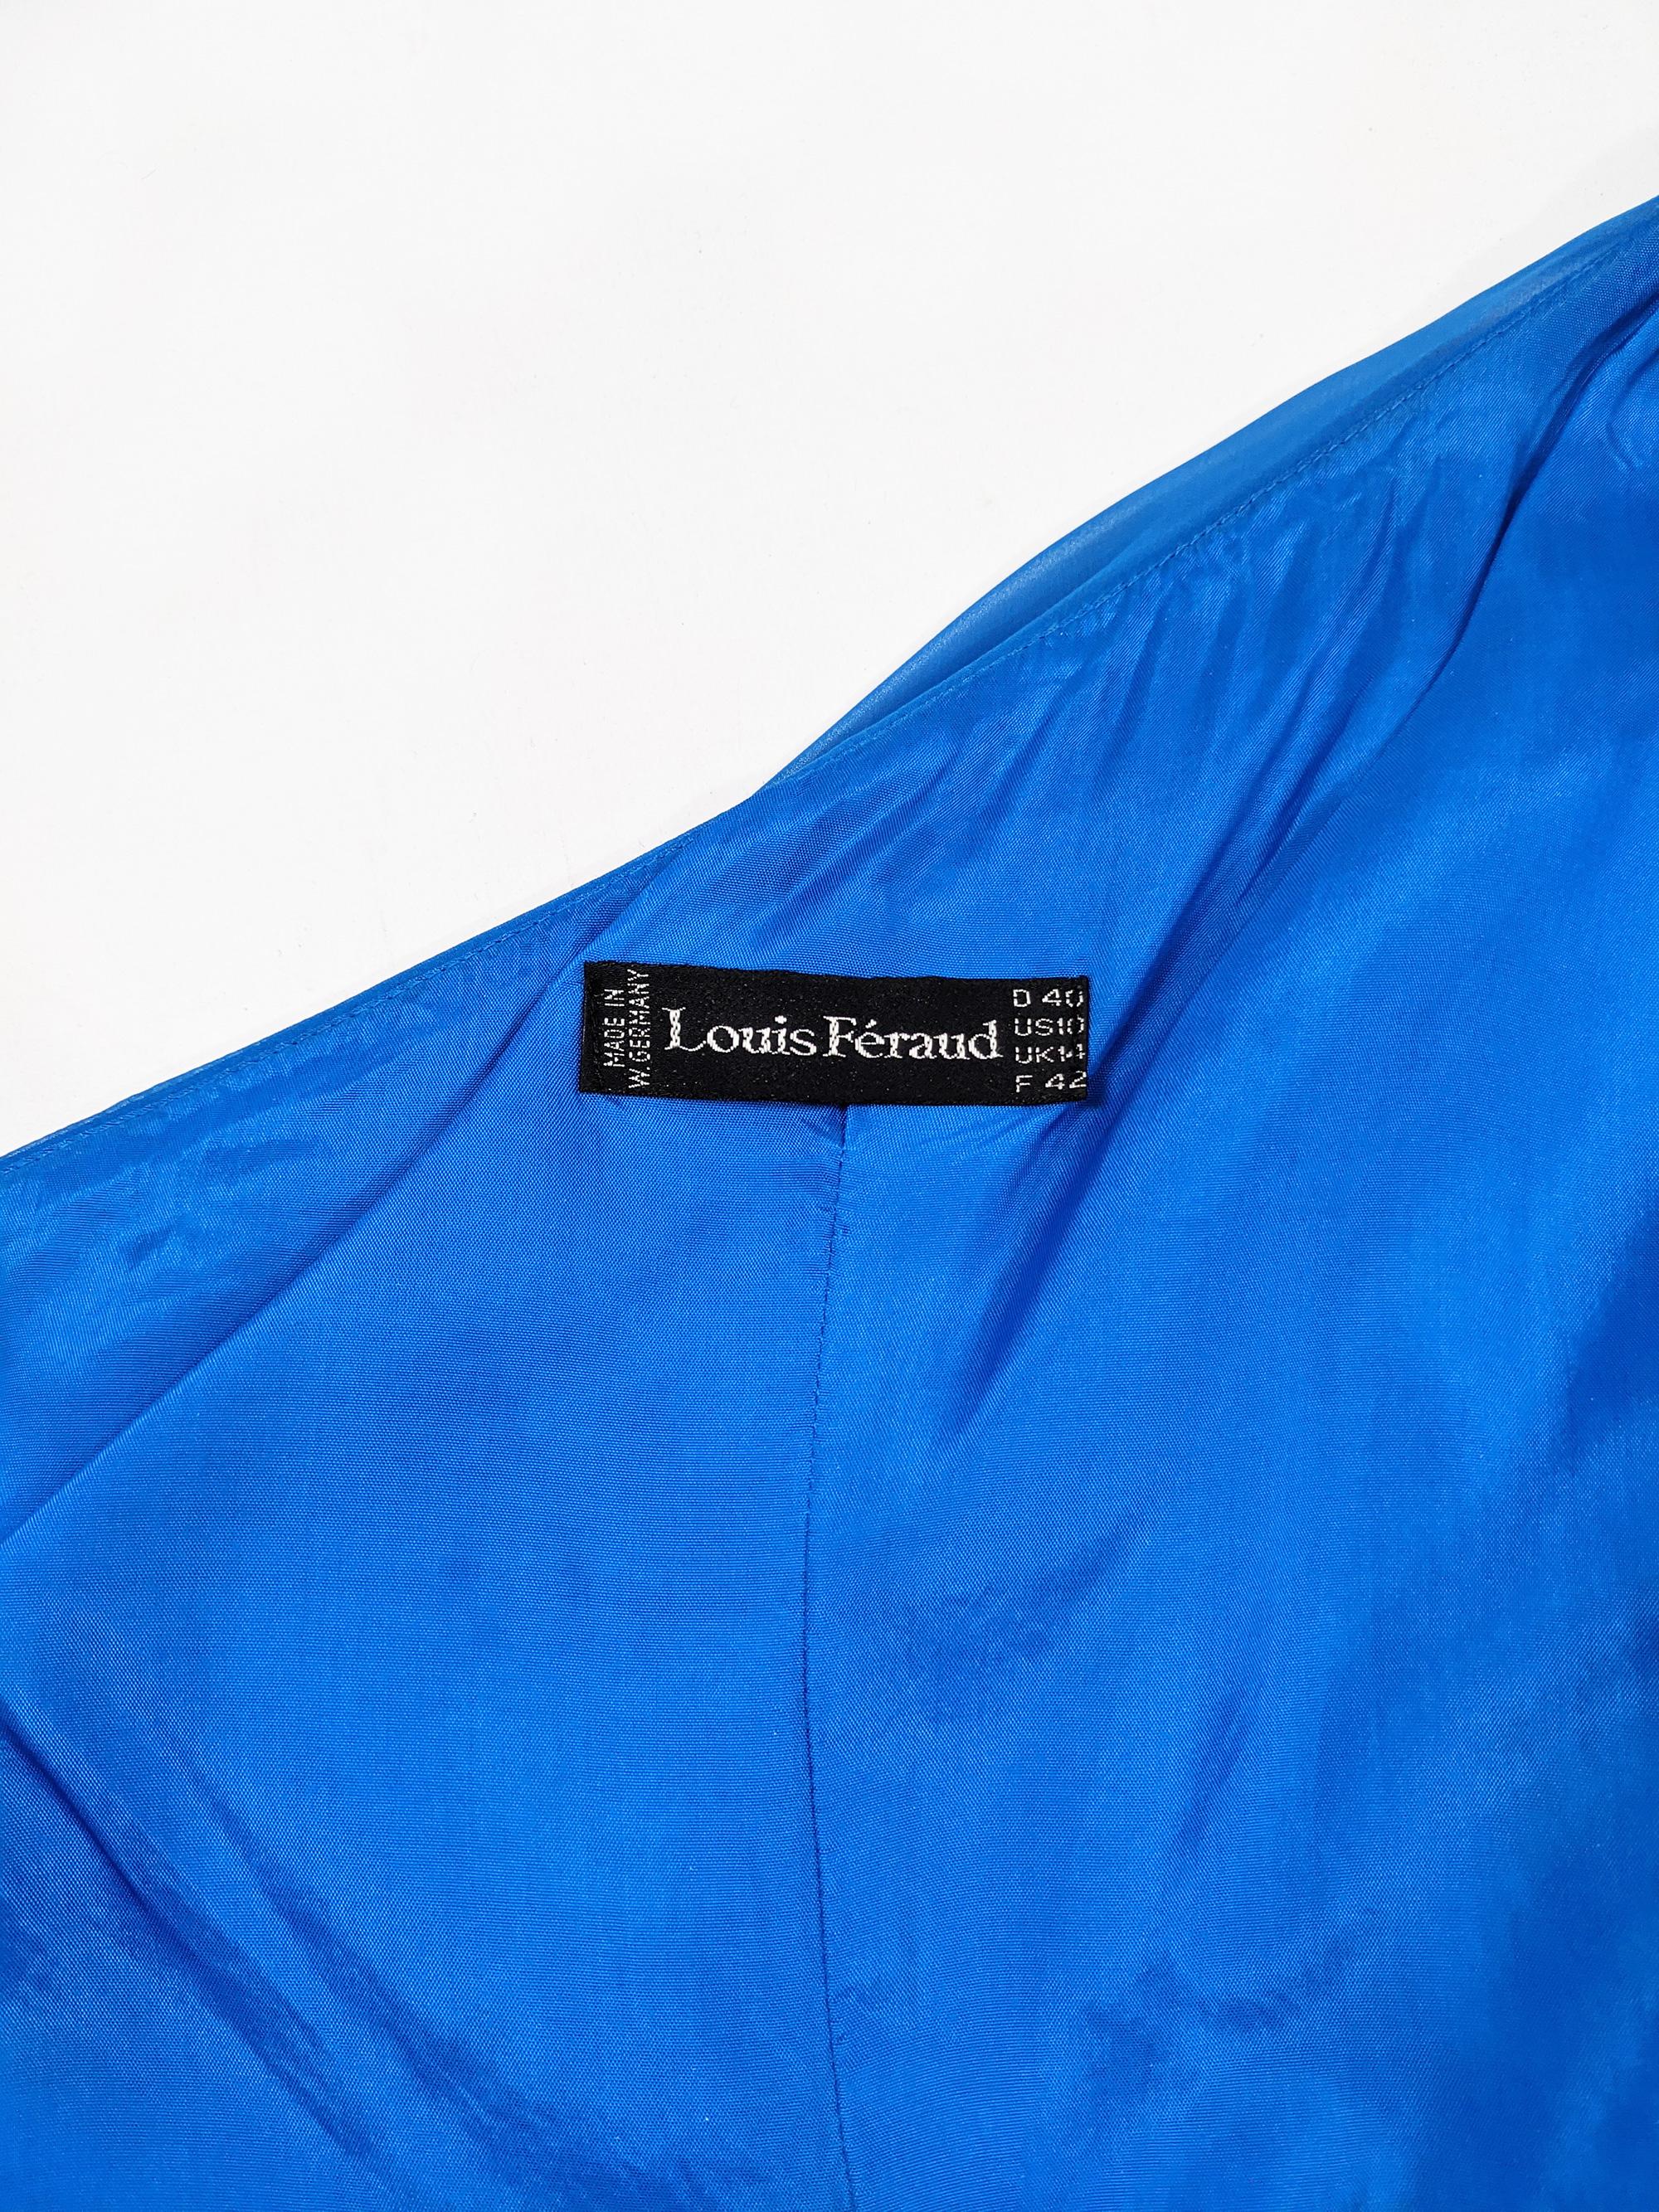 Louis Feraud Vintage Blue Chiffon Evening Dress 4